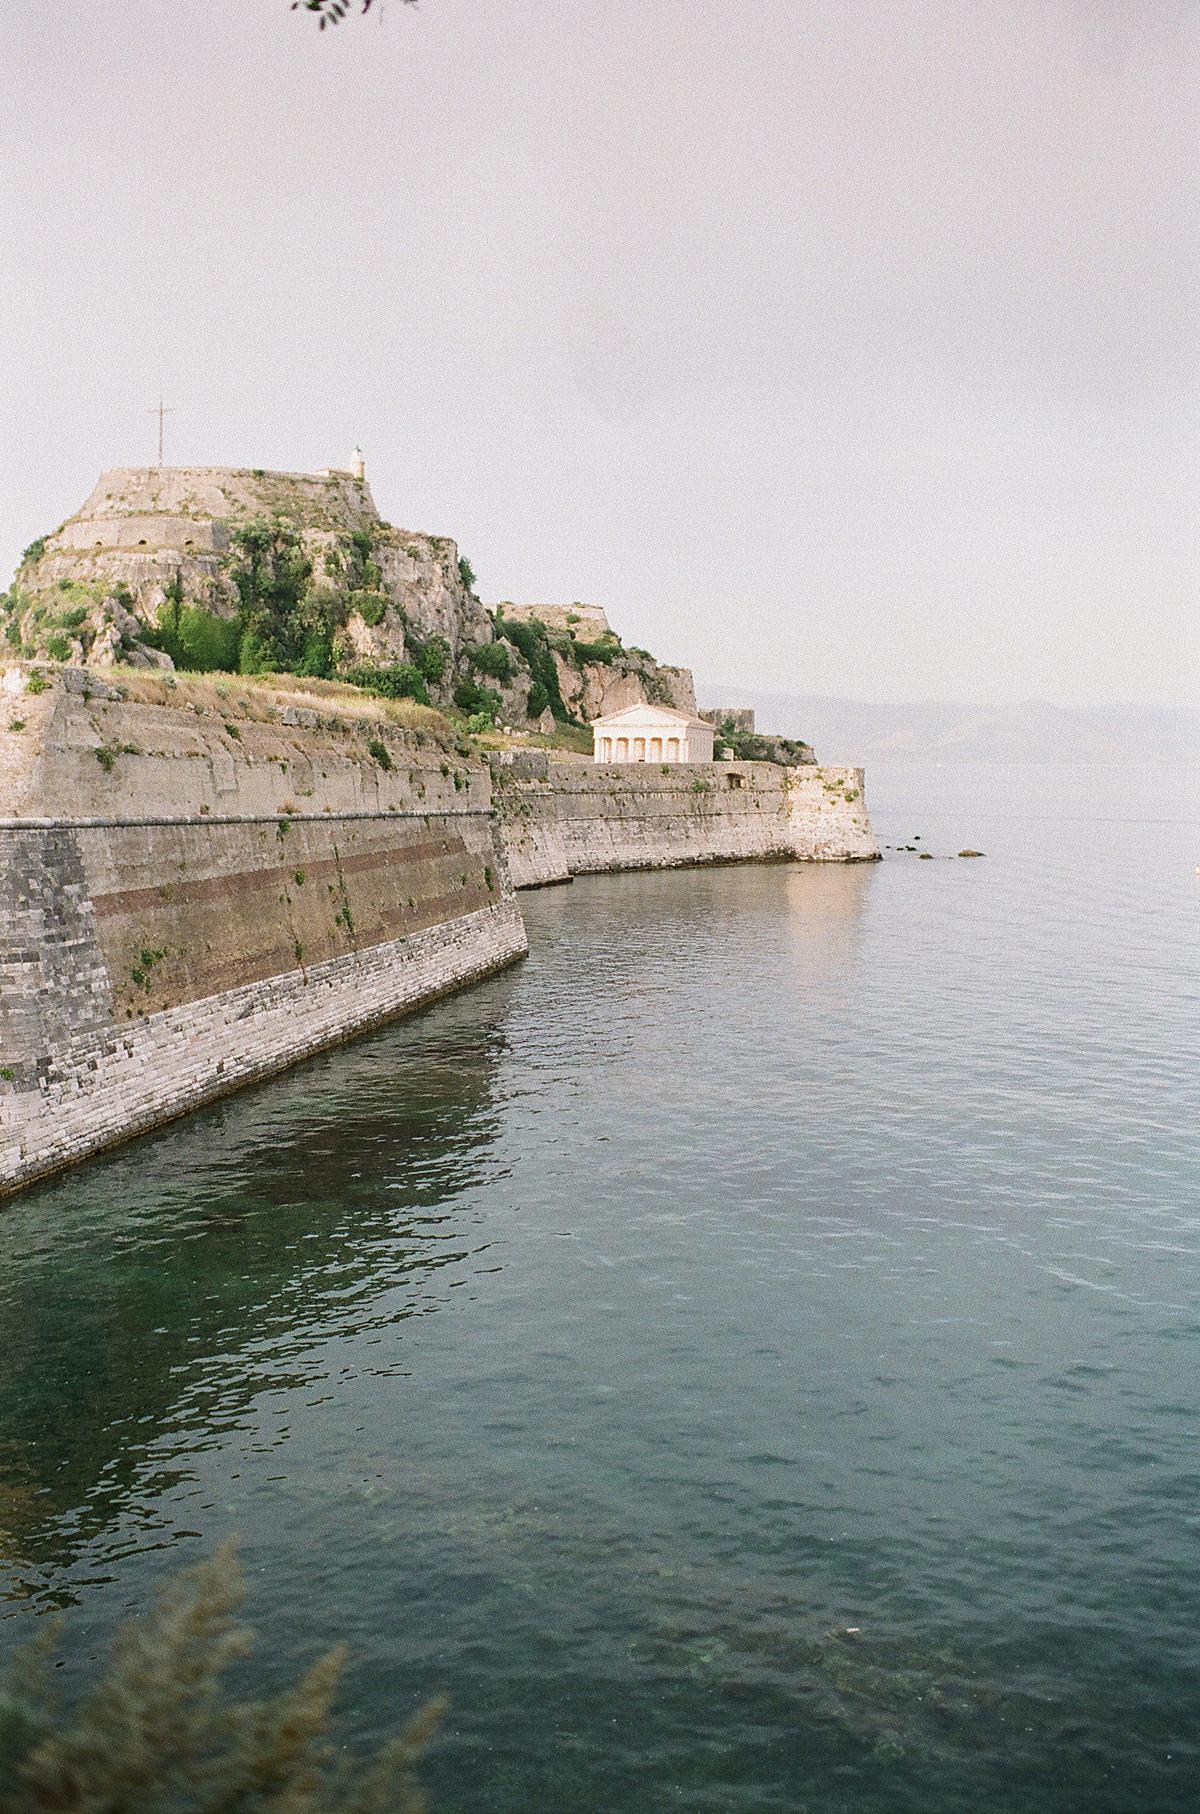 Corfu island as a favourite destination wedding spot